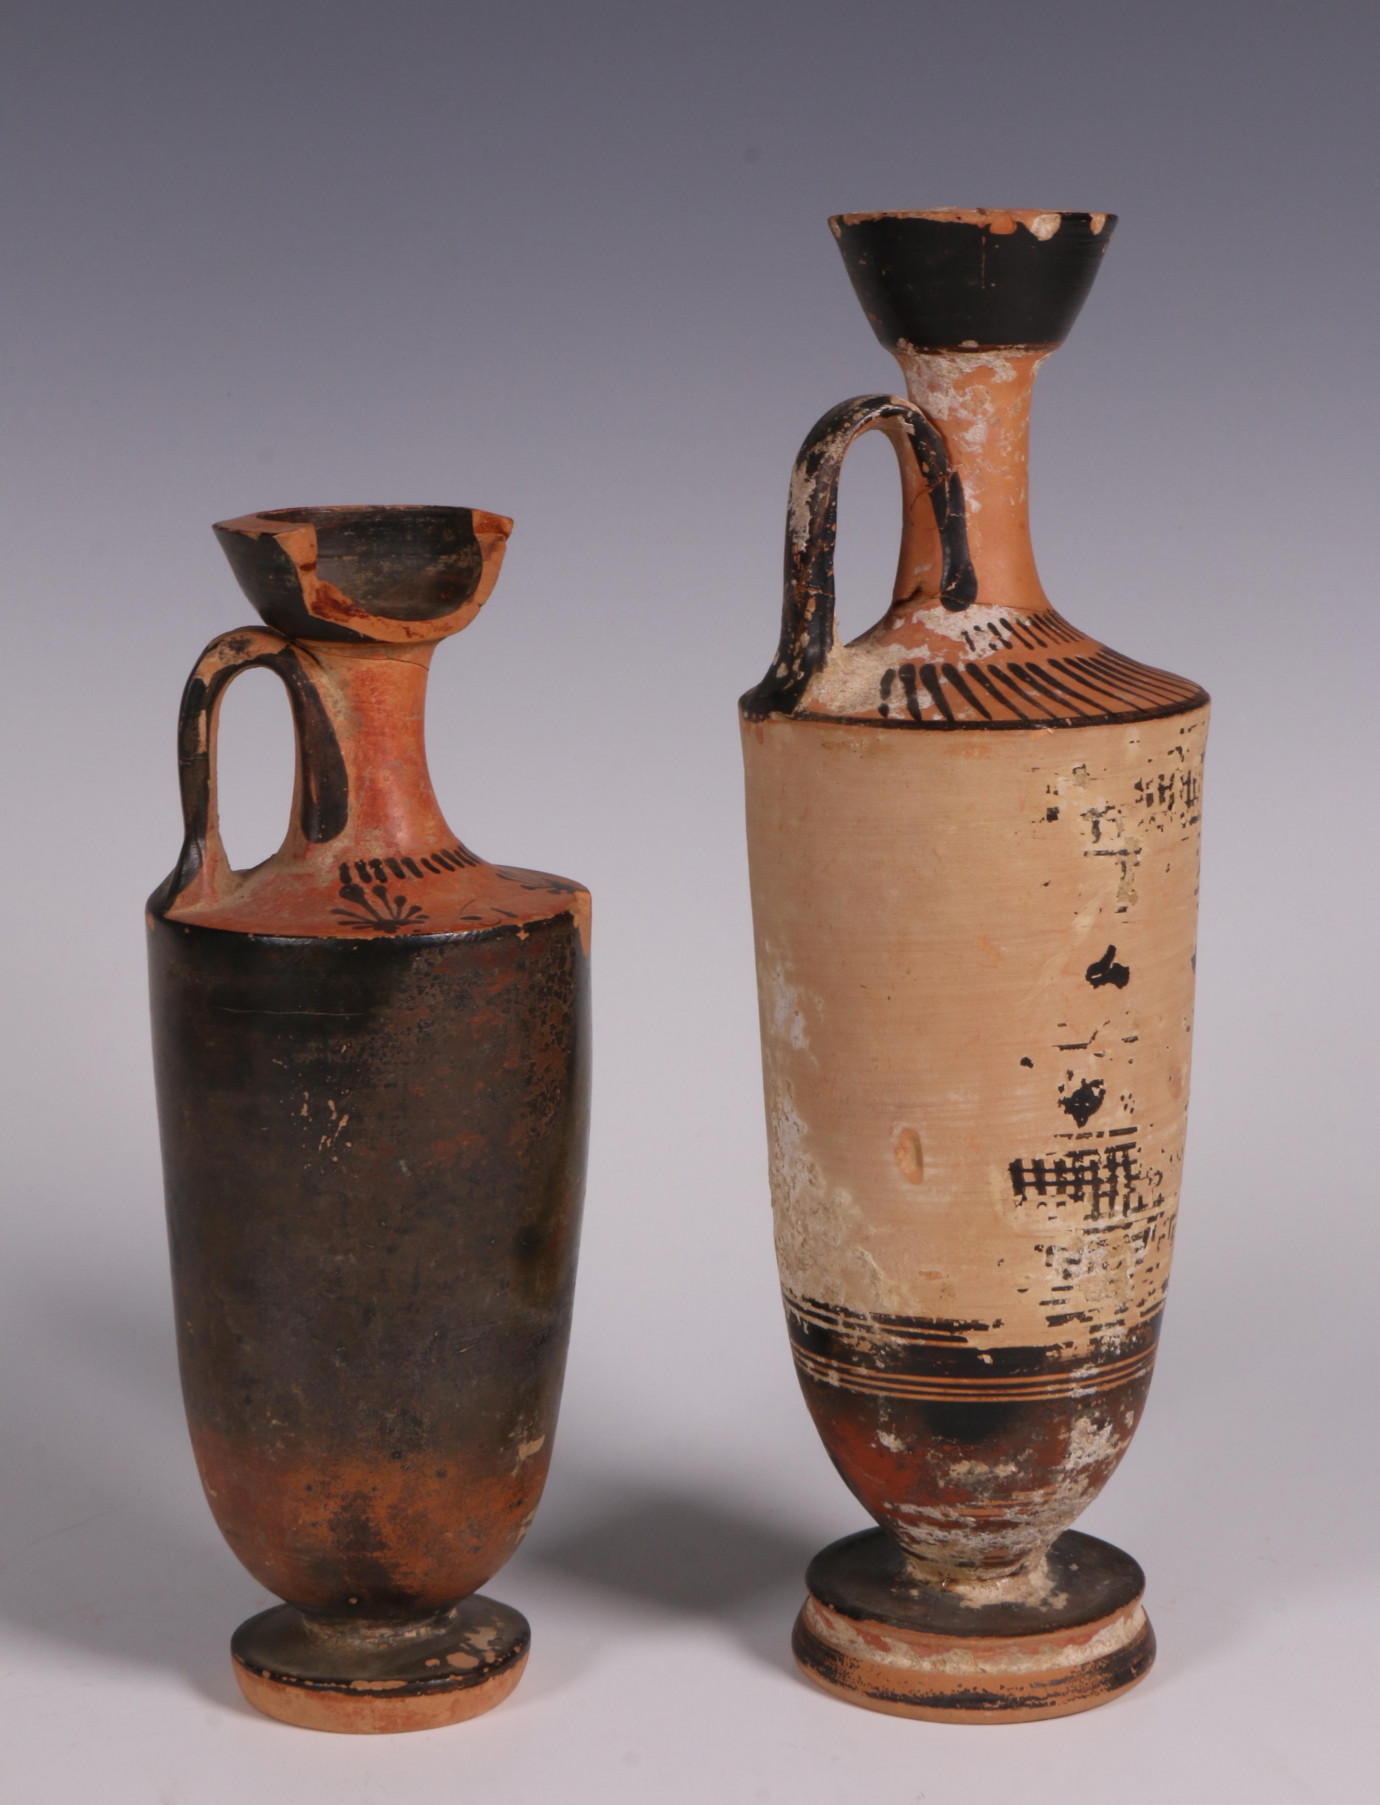 Campania, black ware oillamp and two Greek Attic lekithos vases, ca. 6th-4th century BC. - Image 3 of 4